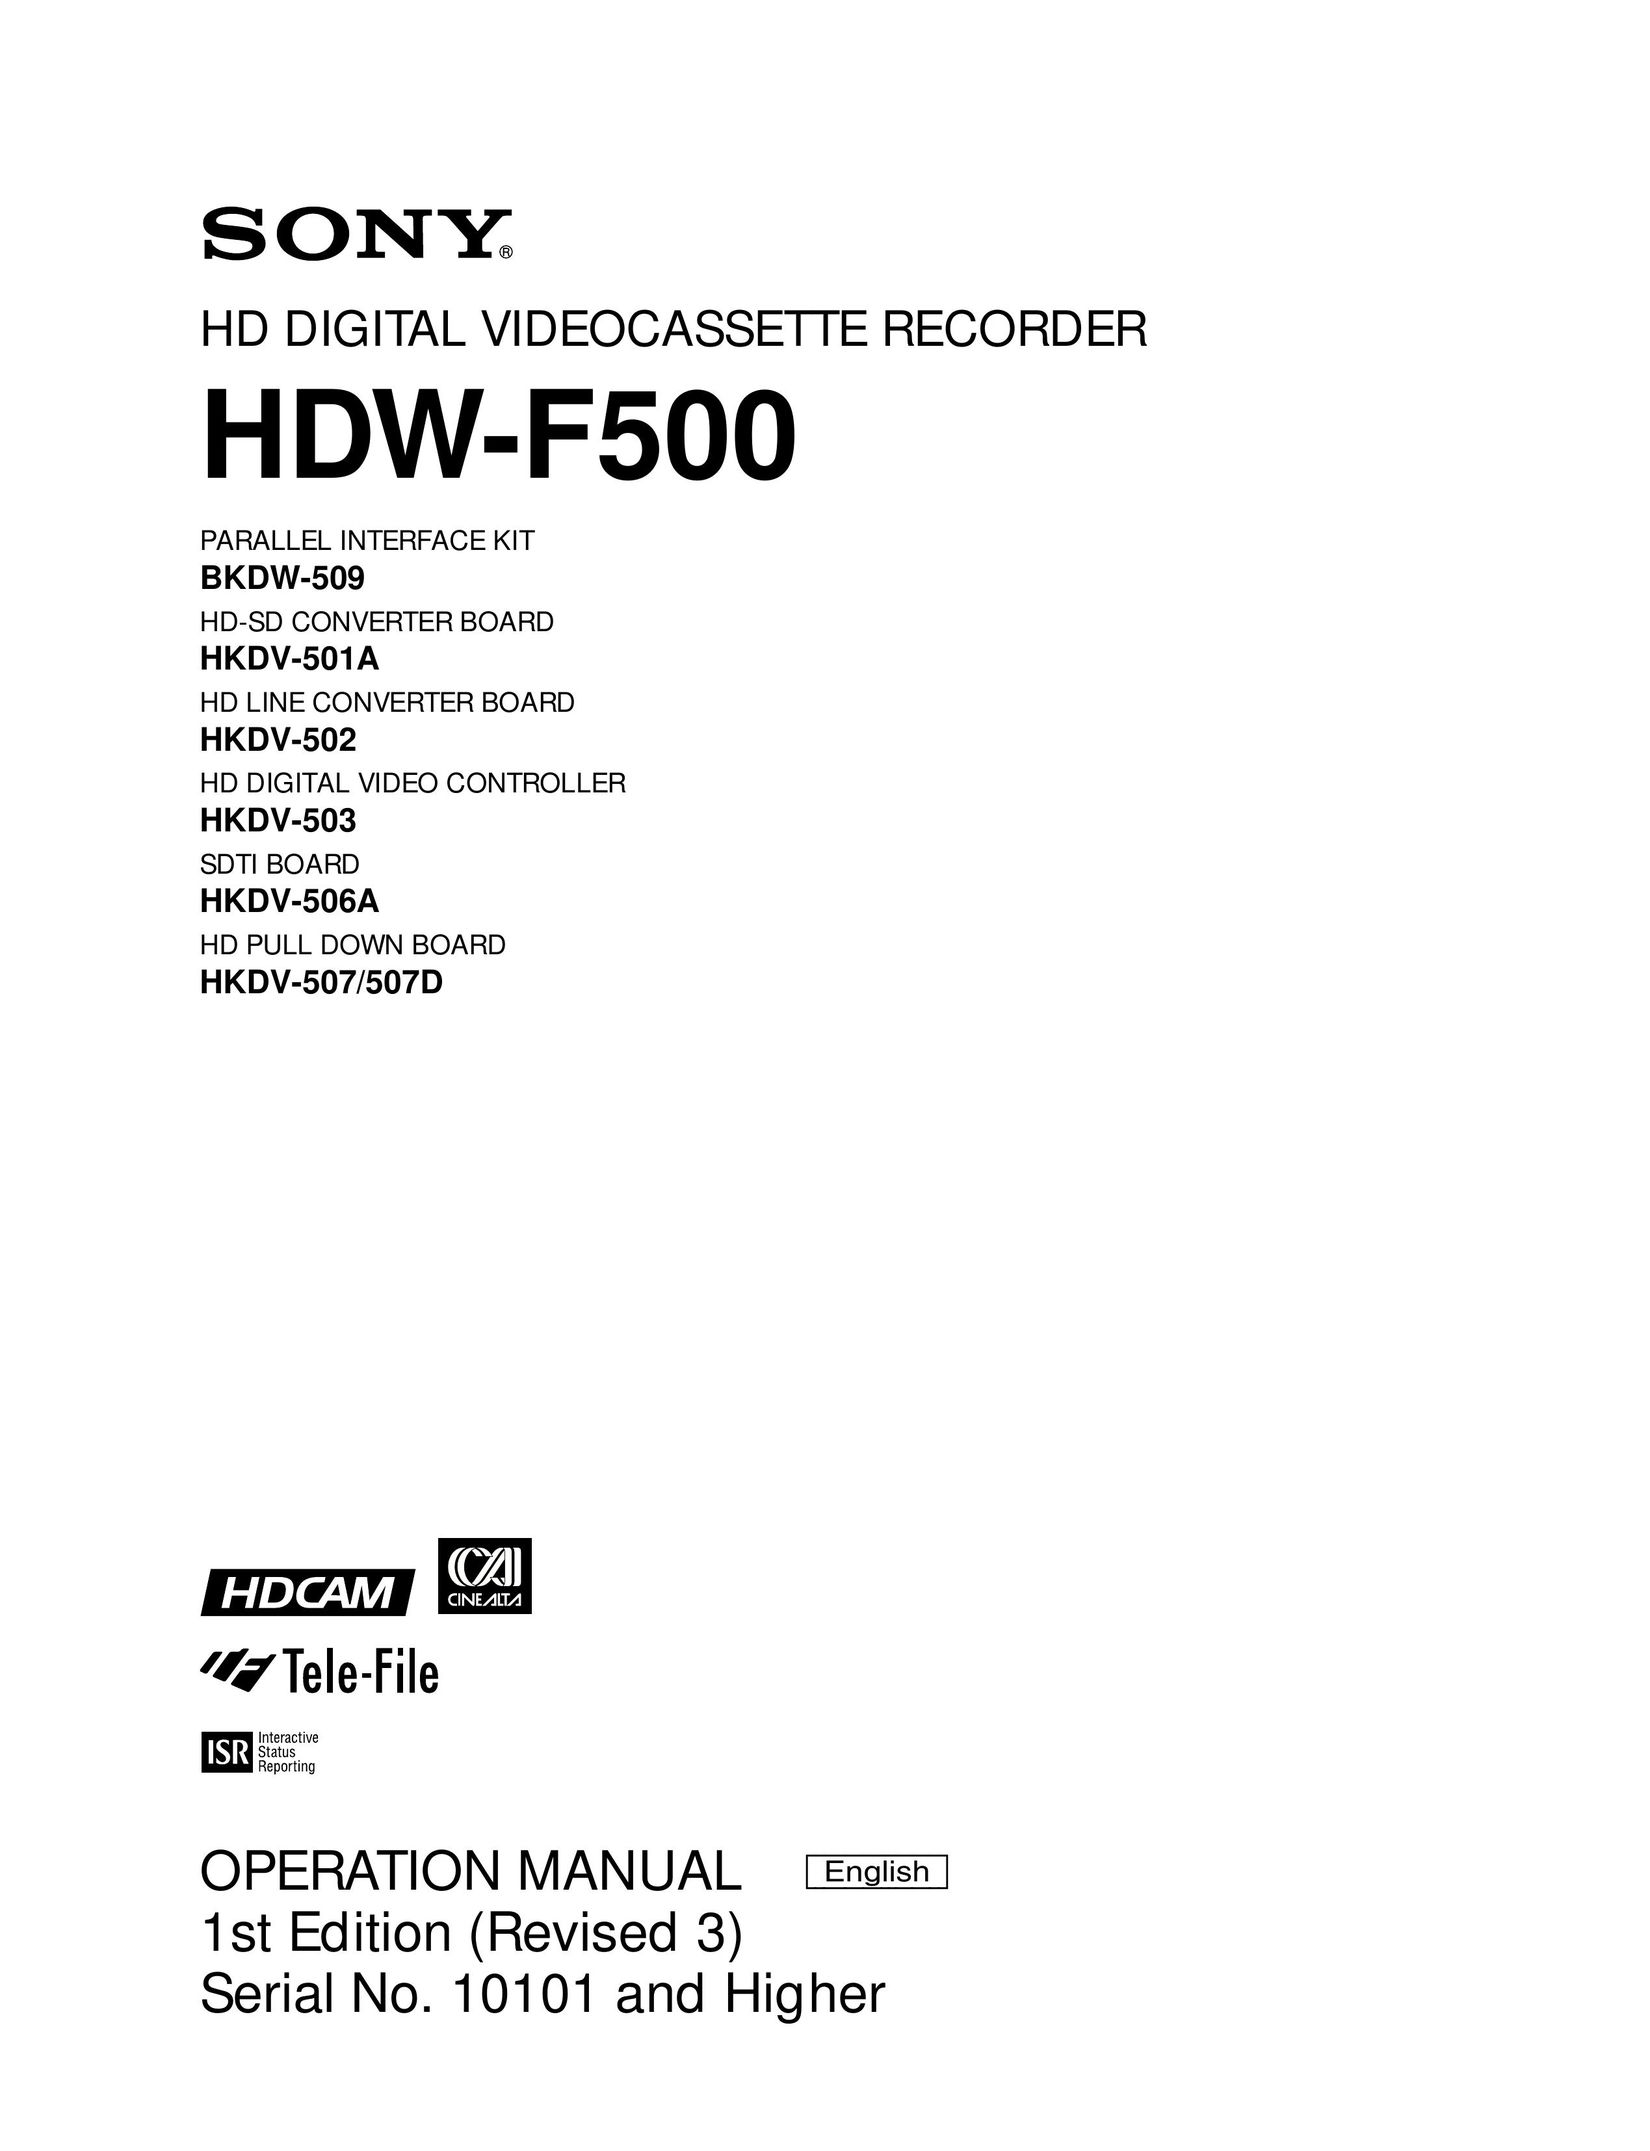 Sony BKDW-509 DVD VCR Combo User Manual